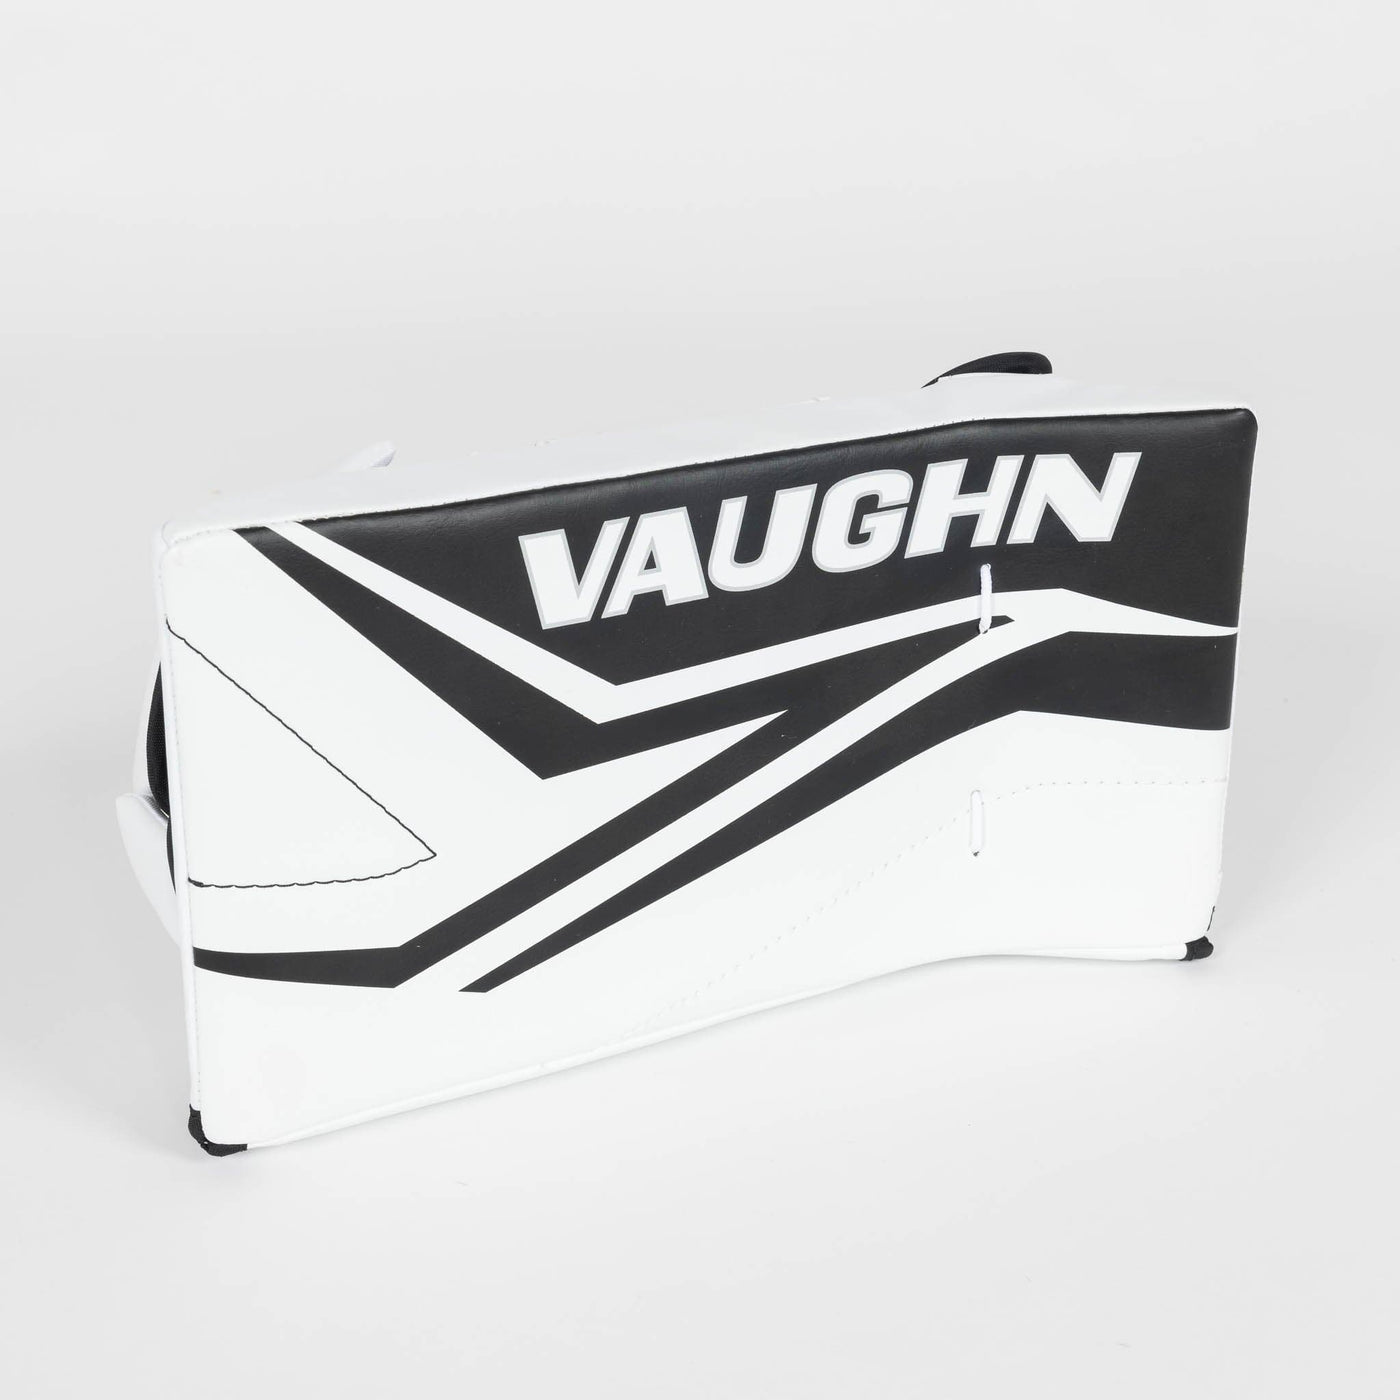 Vaughn Ventus SLR3 Youth Goalie Blocker - The Hockey Shop Source For Sports